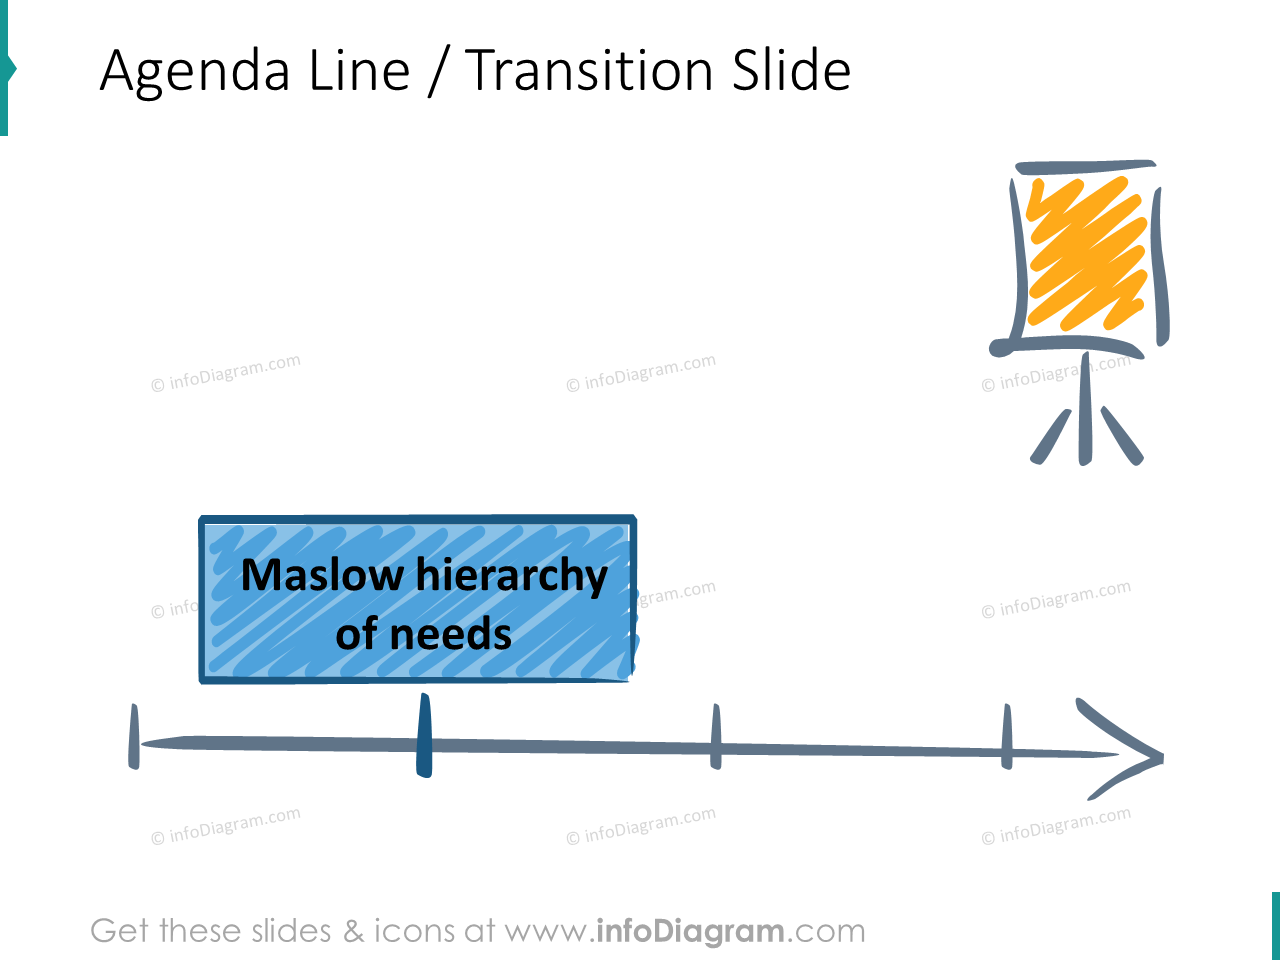 motivation training agenda transition slide maslow icons ppt clipart